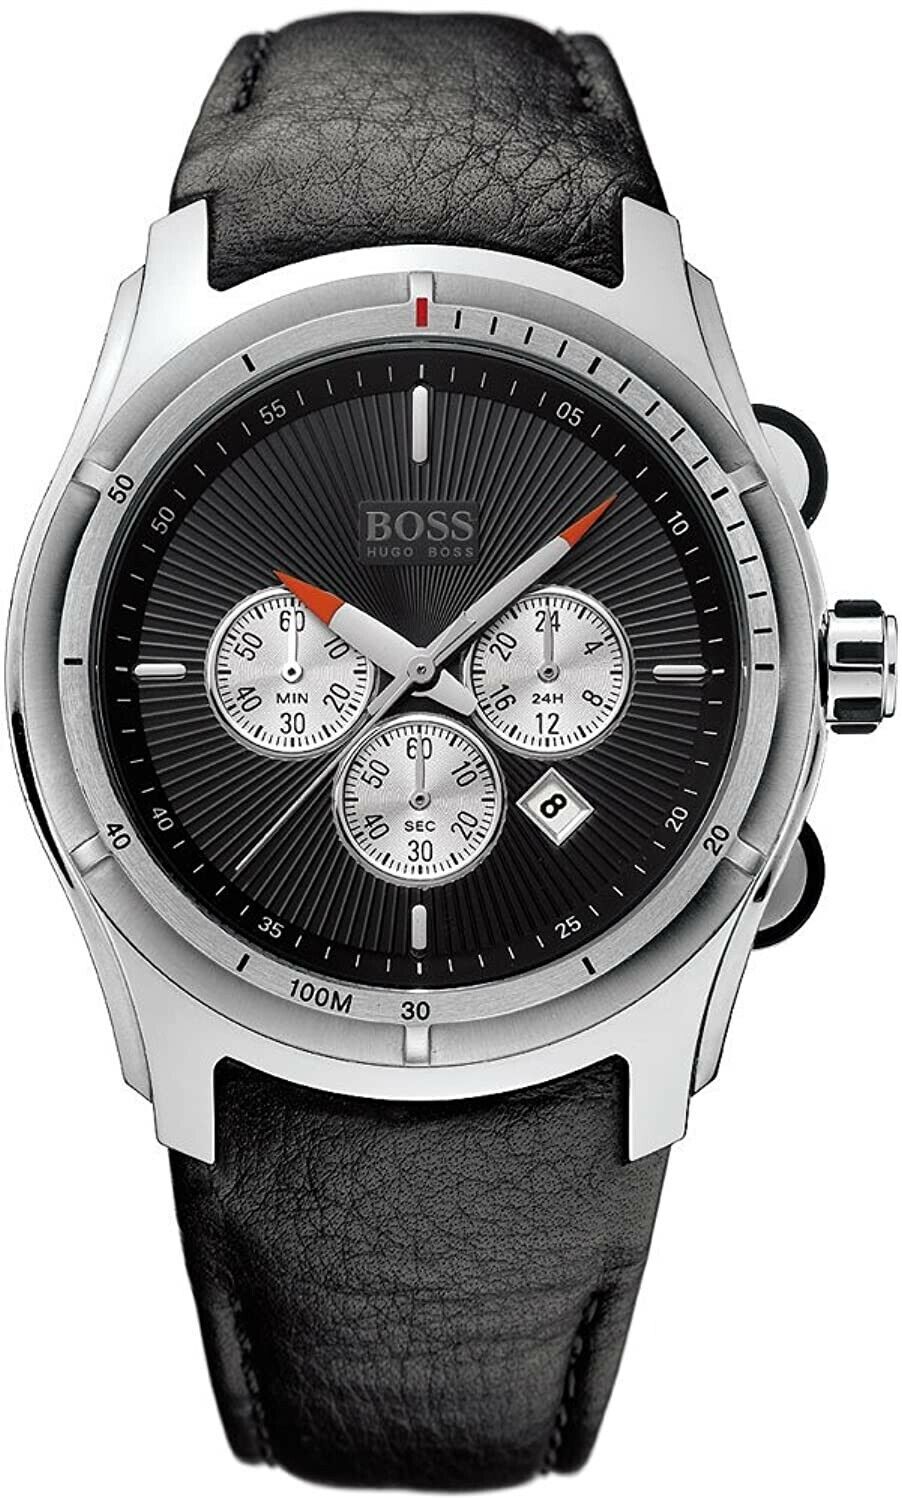 Black Chronograph | Leather Strap NEW Watch Boss Hugo Dial 100M eBay 1512152 Mens $525